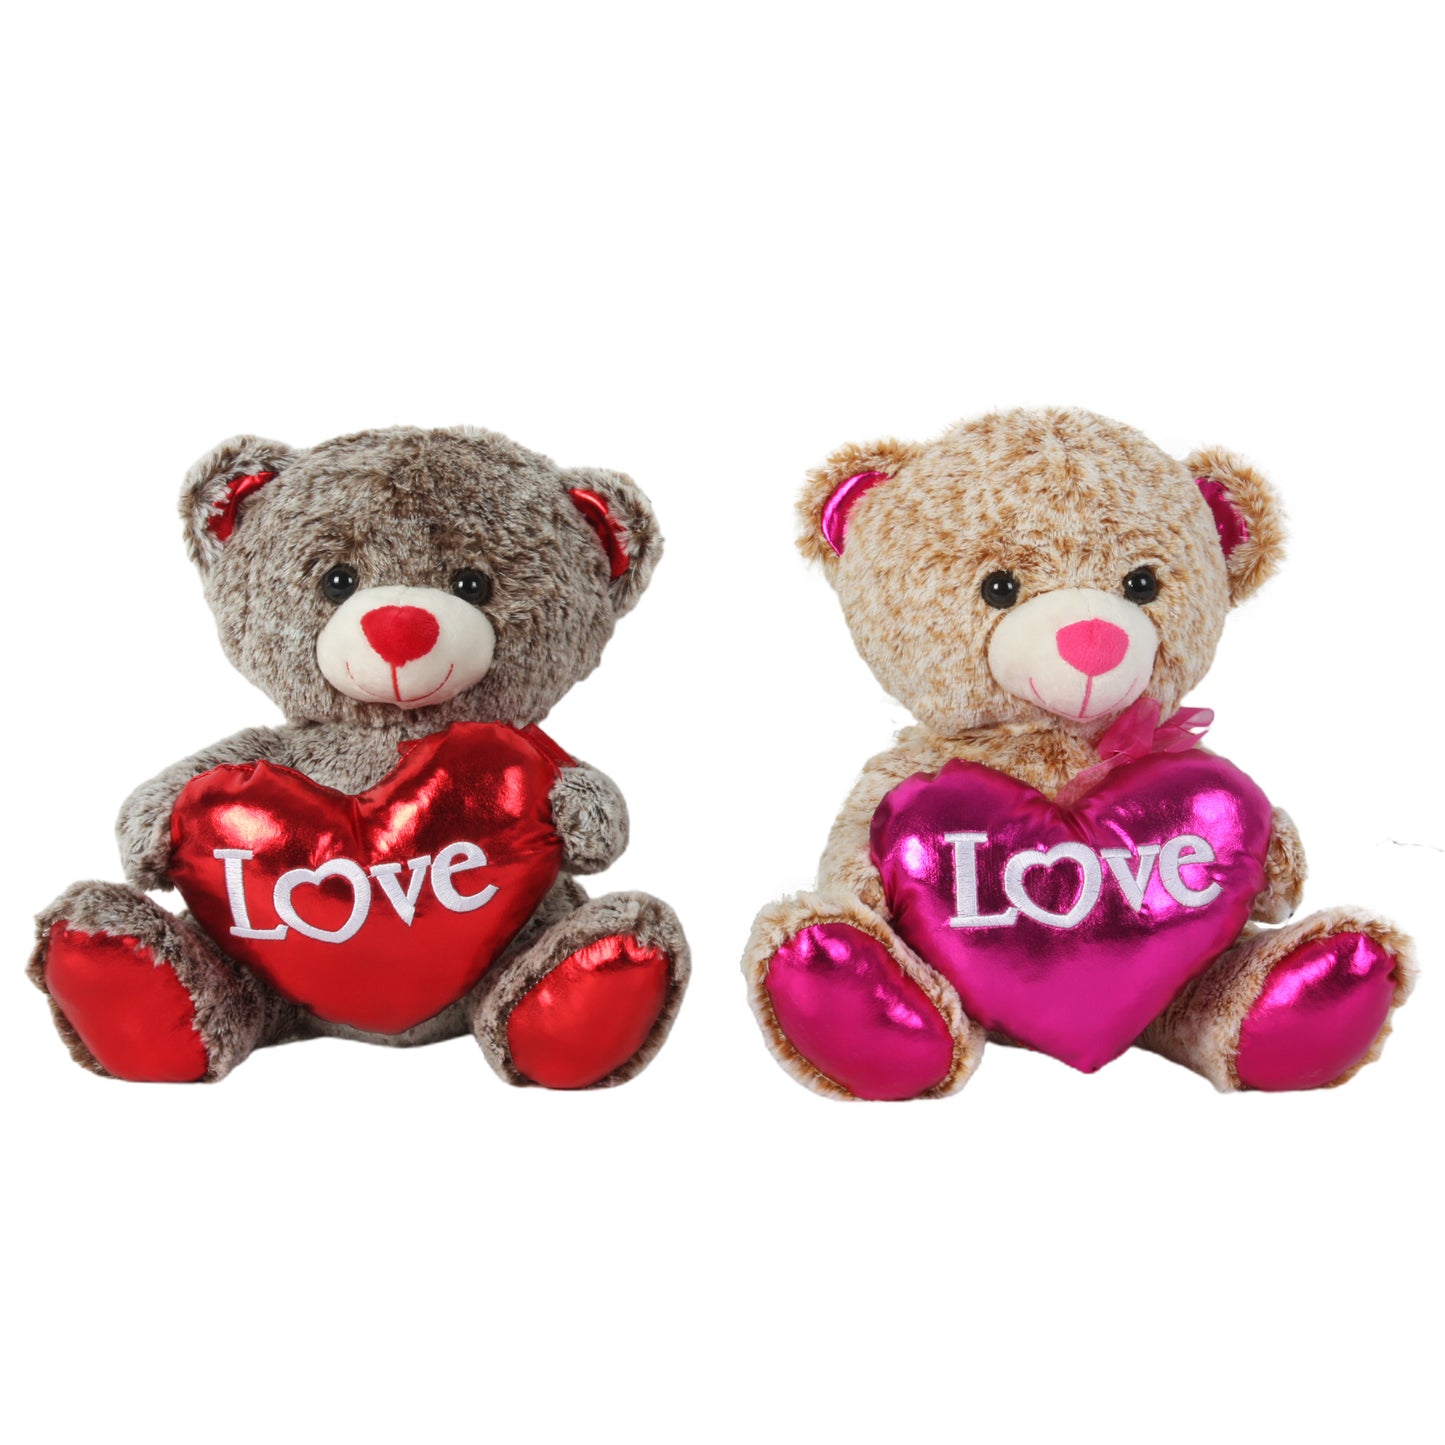 12" Love Shines Teddy Bear